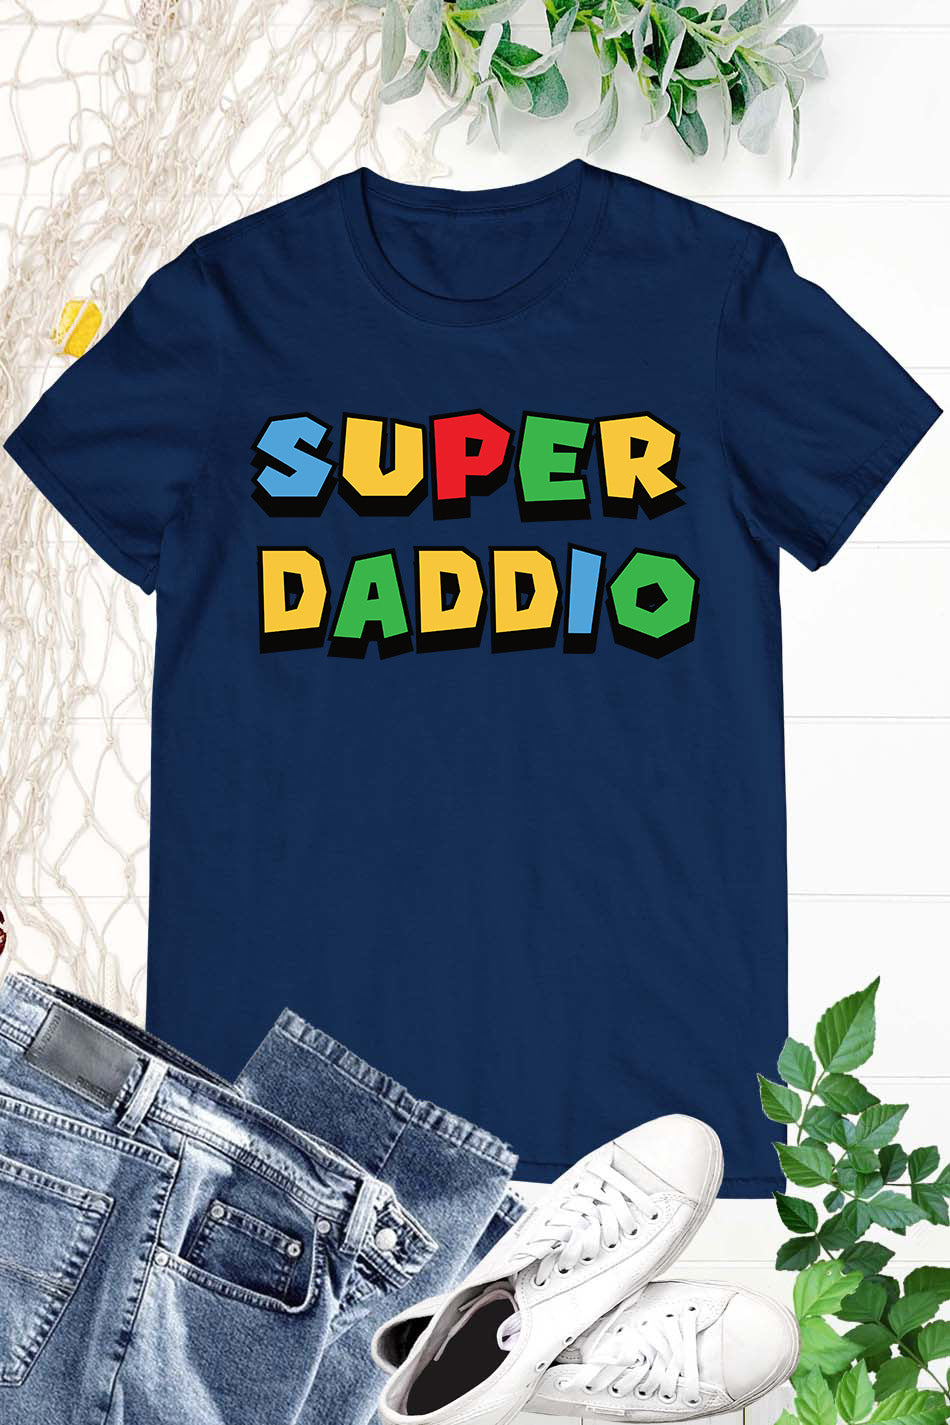 Super Daddio T Shirts